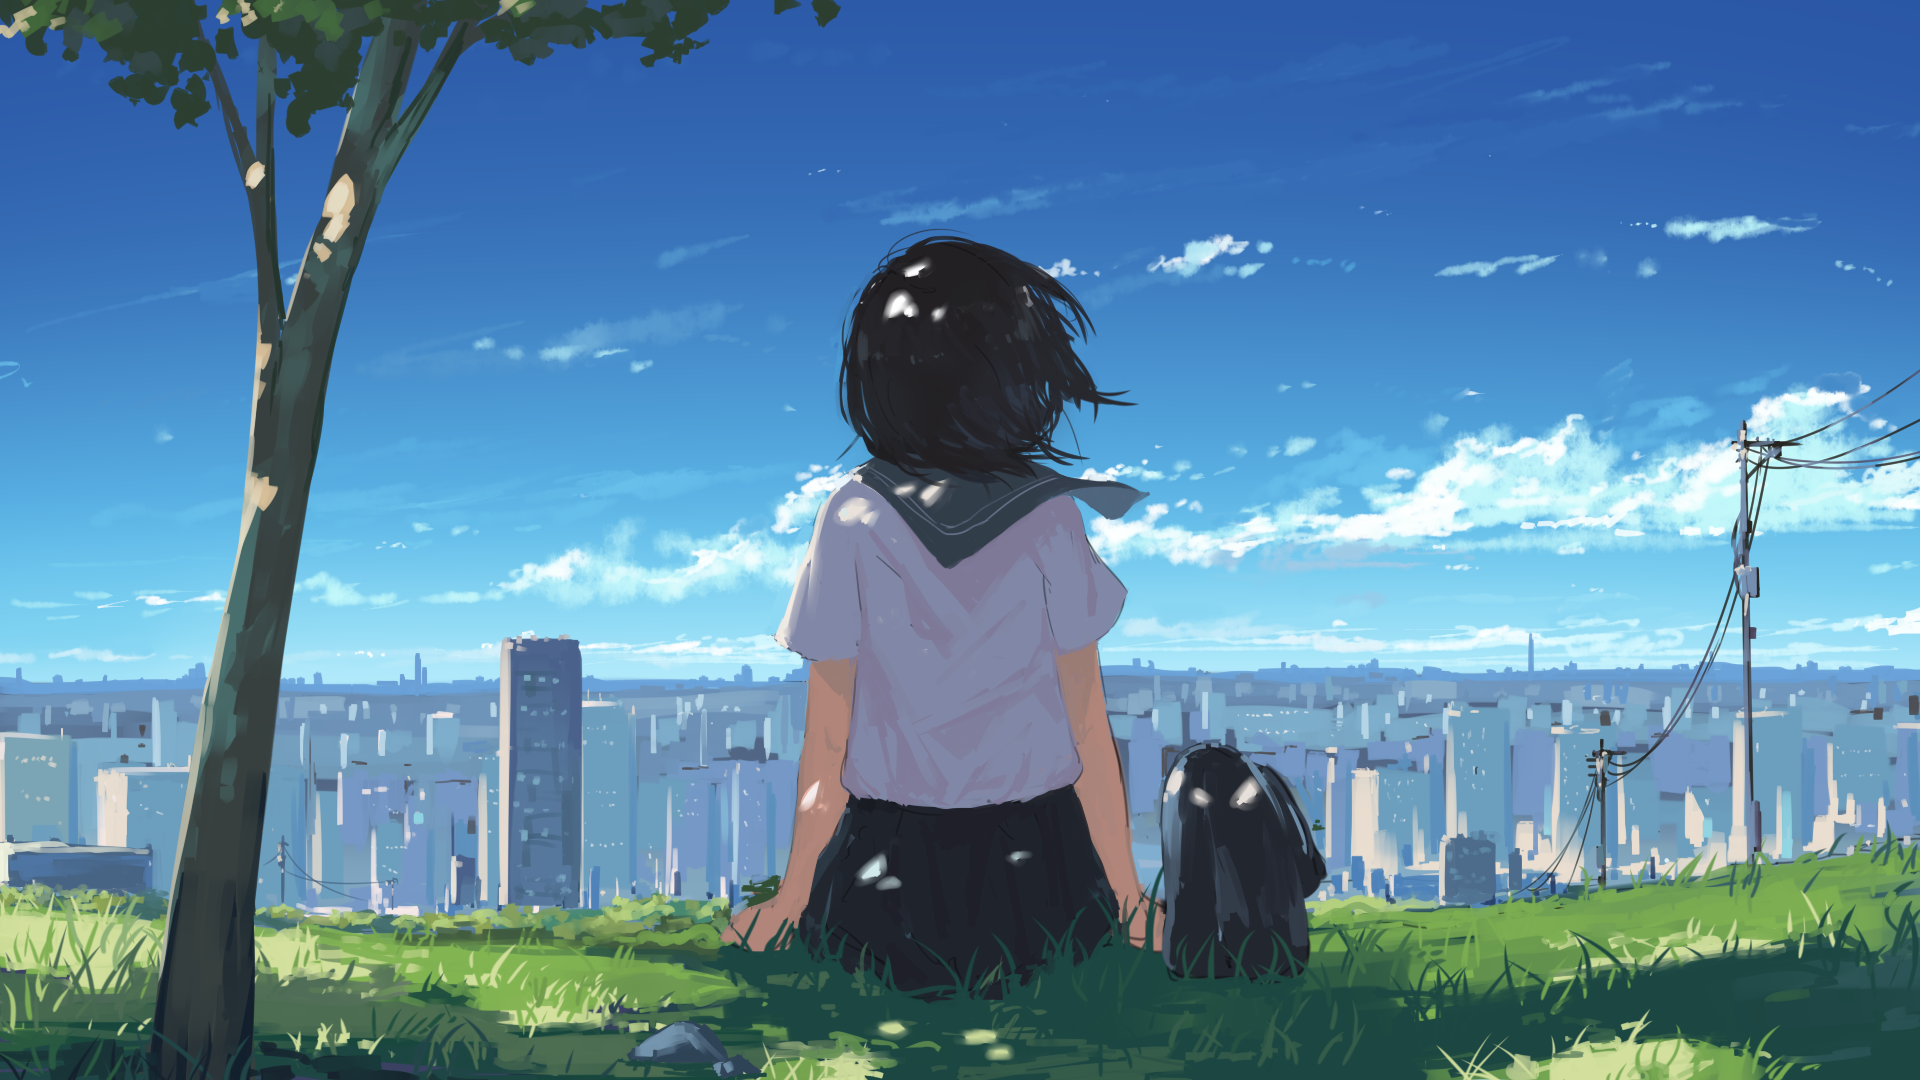 Anime 1920x1080 anime girls schoolgirl original characters cityscape Arttssam grass windy backpacks sky clouds trees sitting back